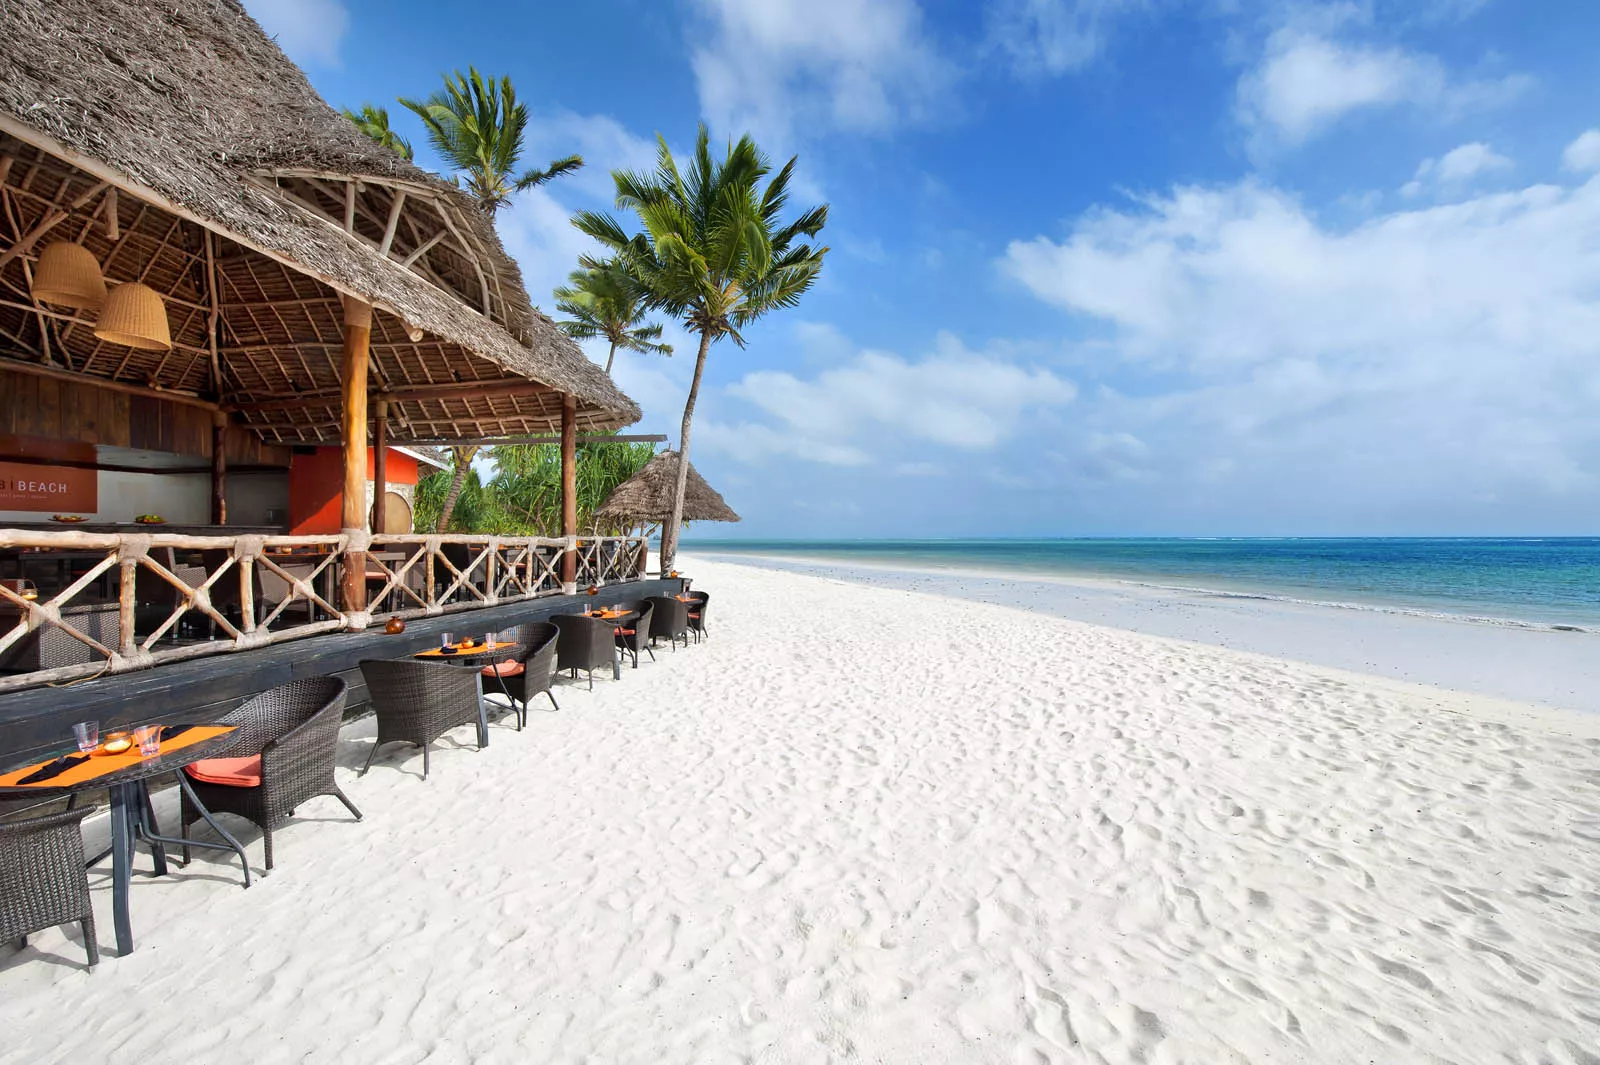 Oferta de viaje a Zanzibar